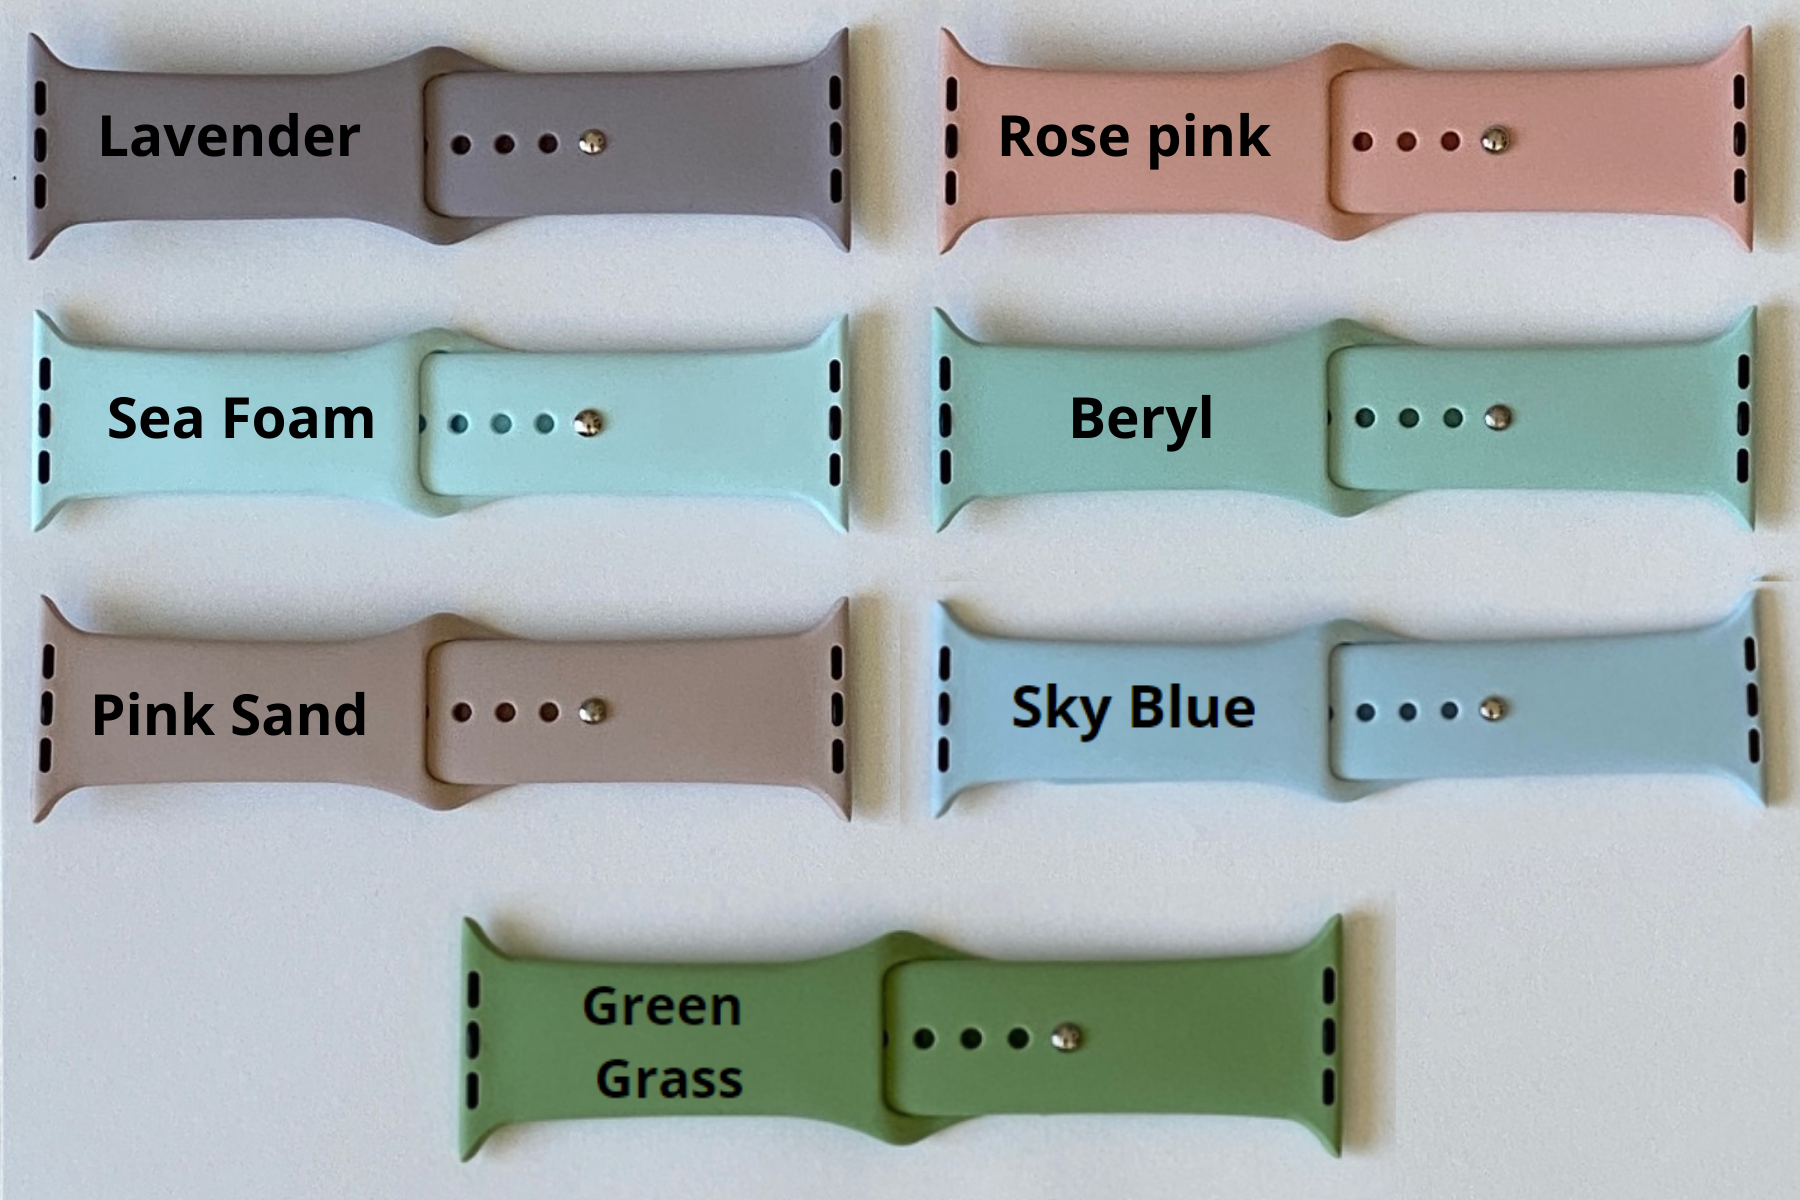 Skylar Pink & Green Apple Watch Band